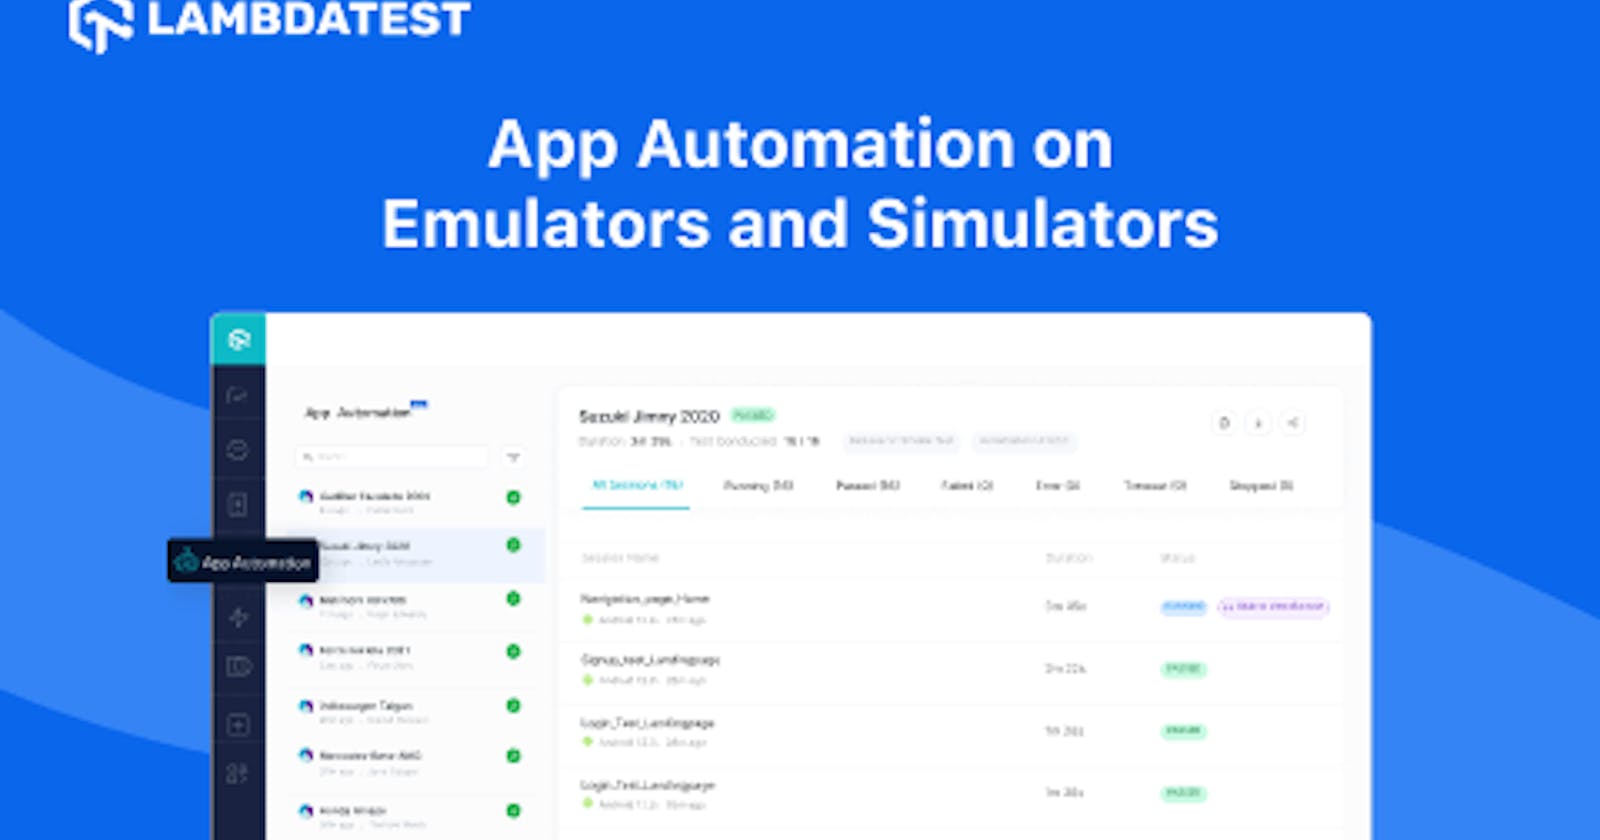 App Automation on Emulators and Simulators is Now Live on LambdaTest